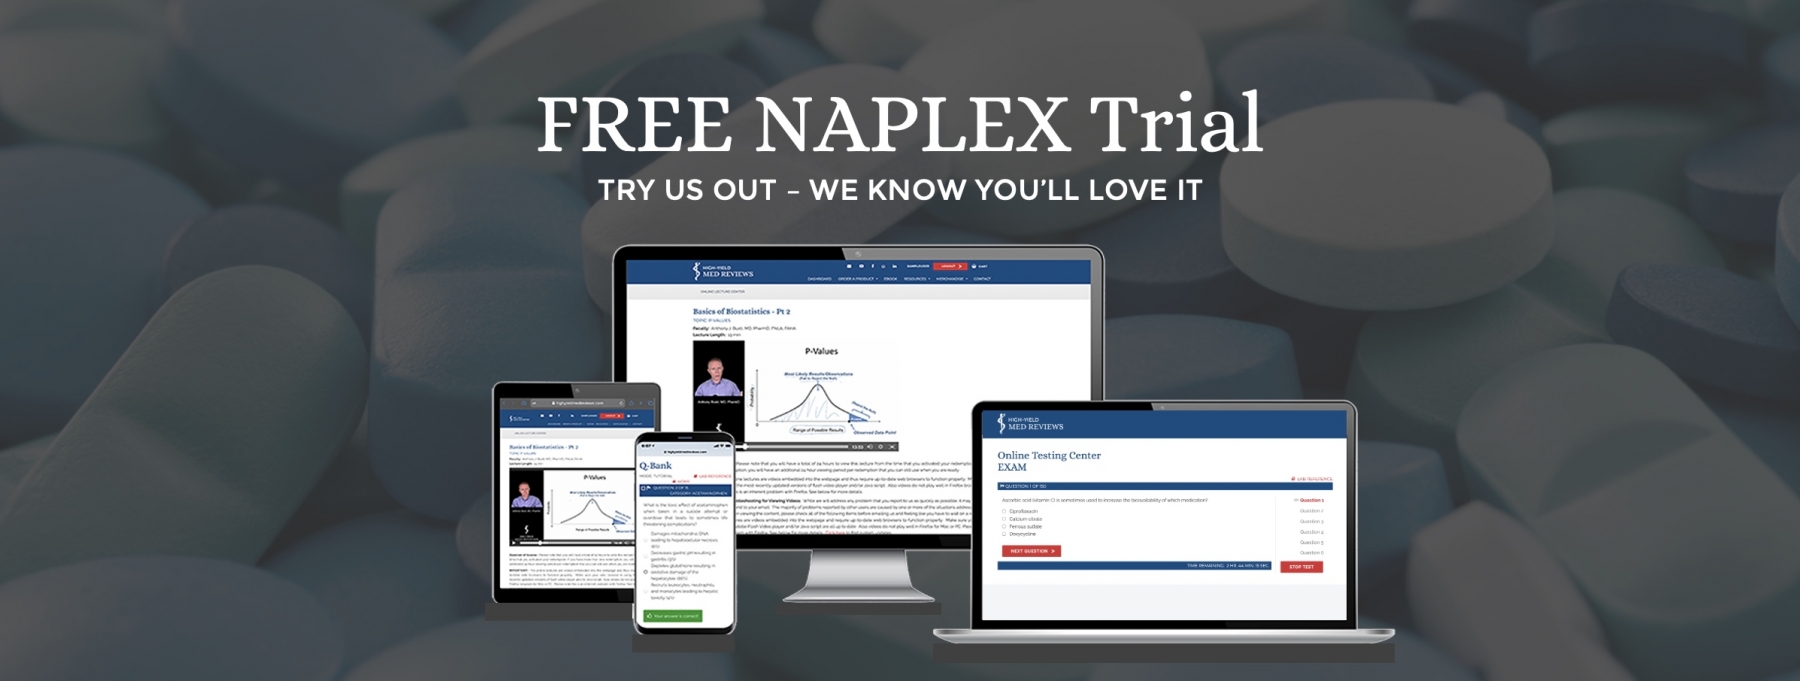 NAPLEX Free Trial